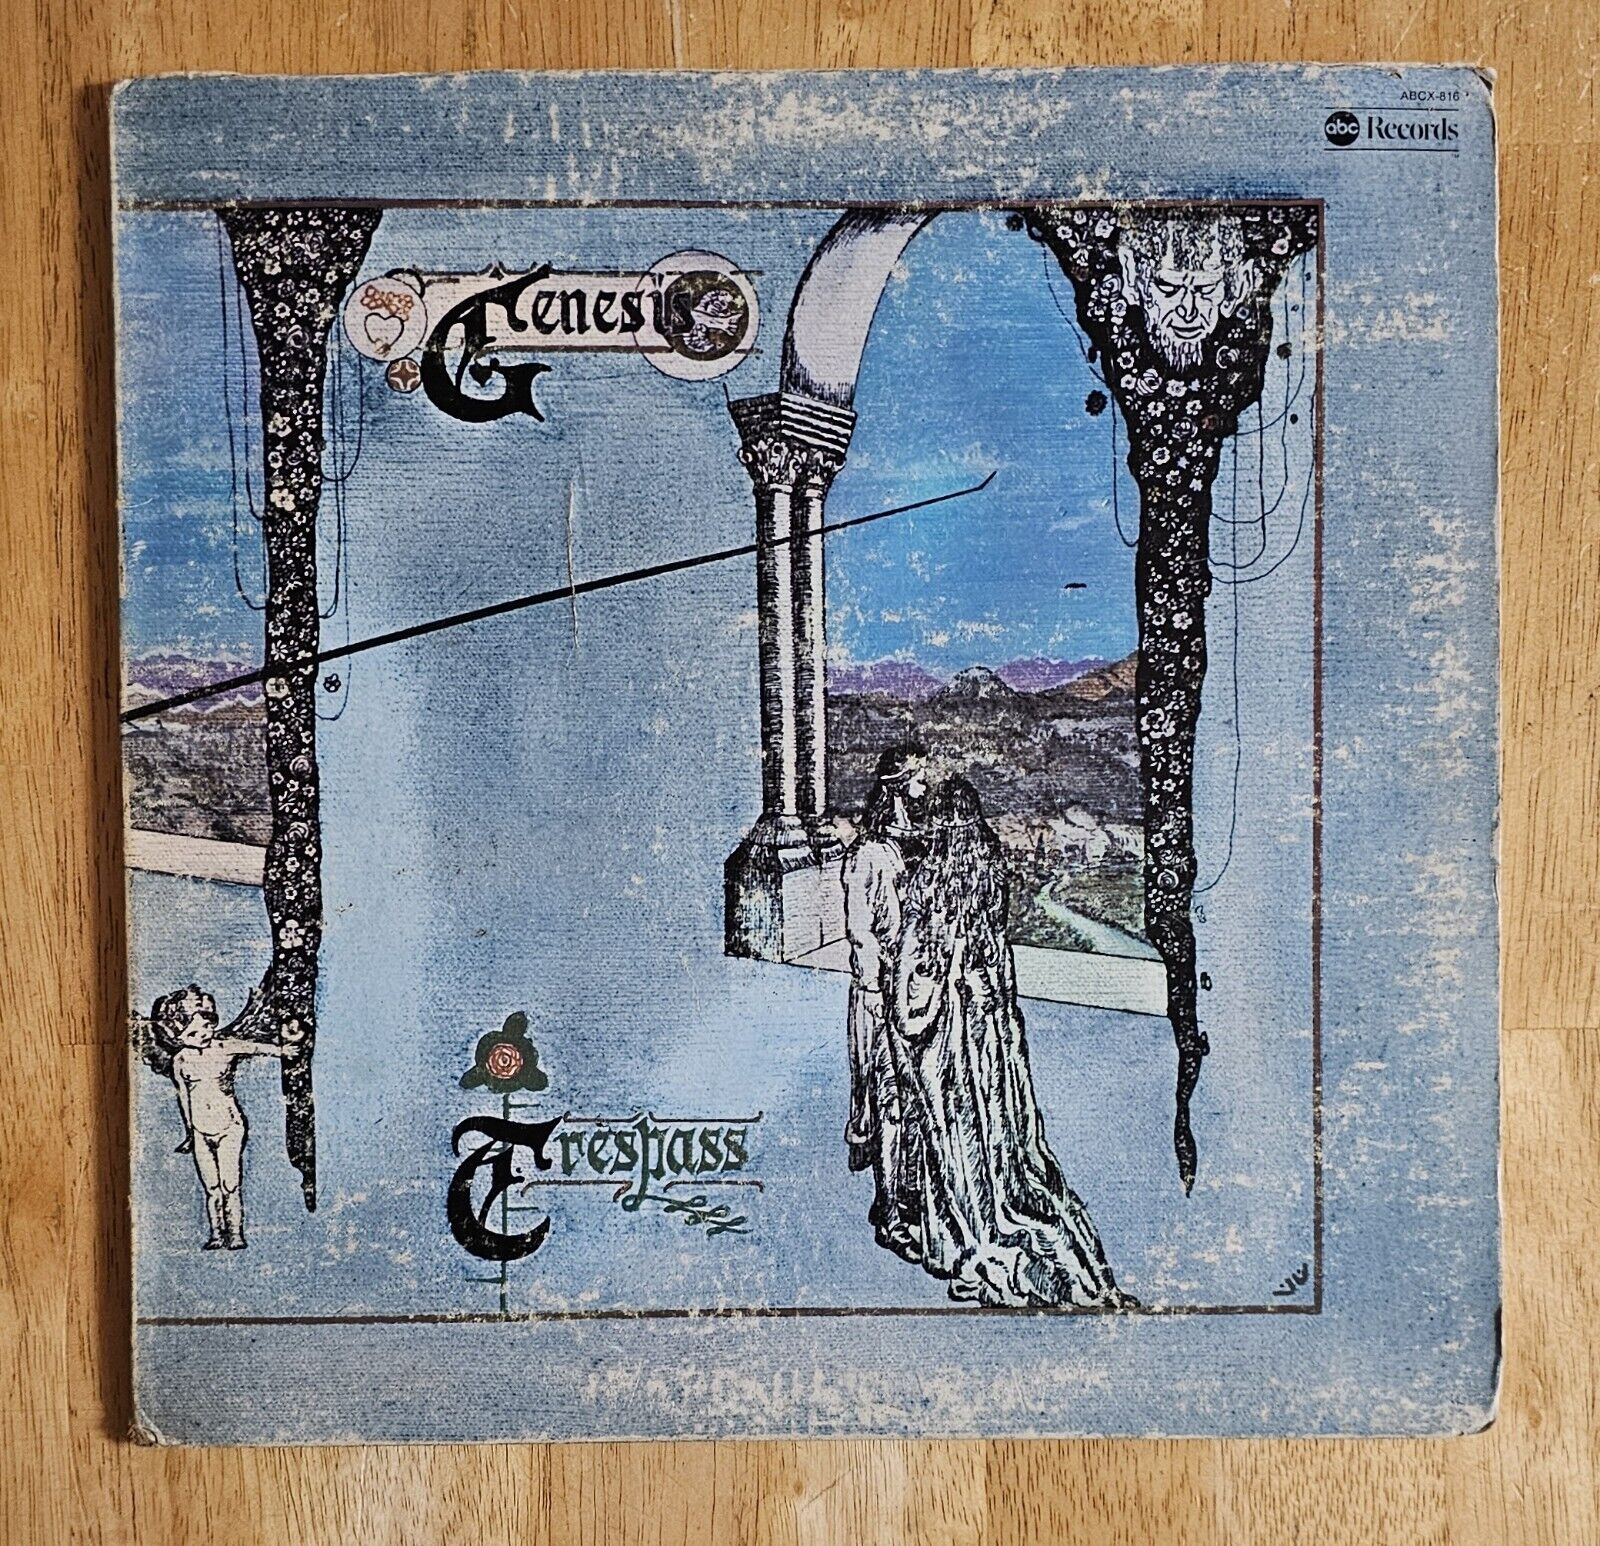 Genesis  Trespass  Vinyl LP Record VG+ With Insert  Peter Gabriel